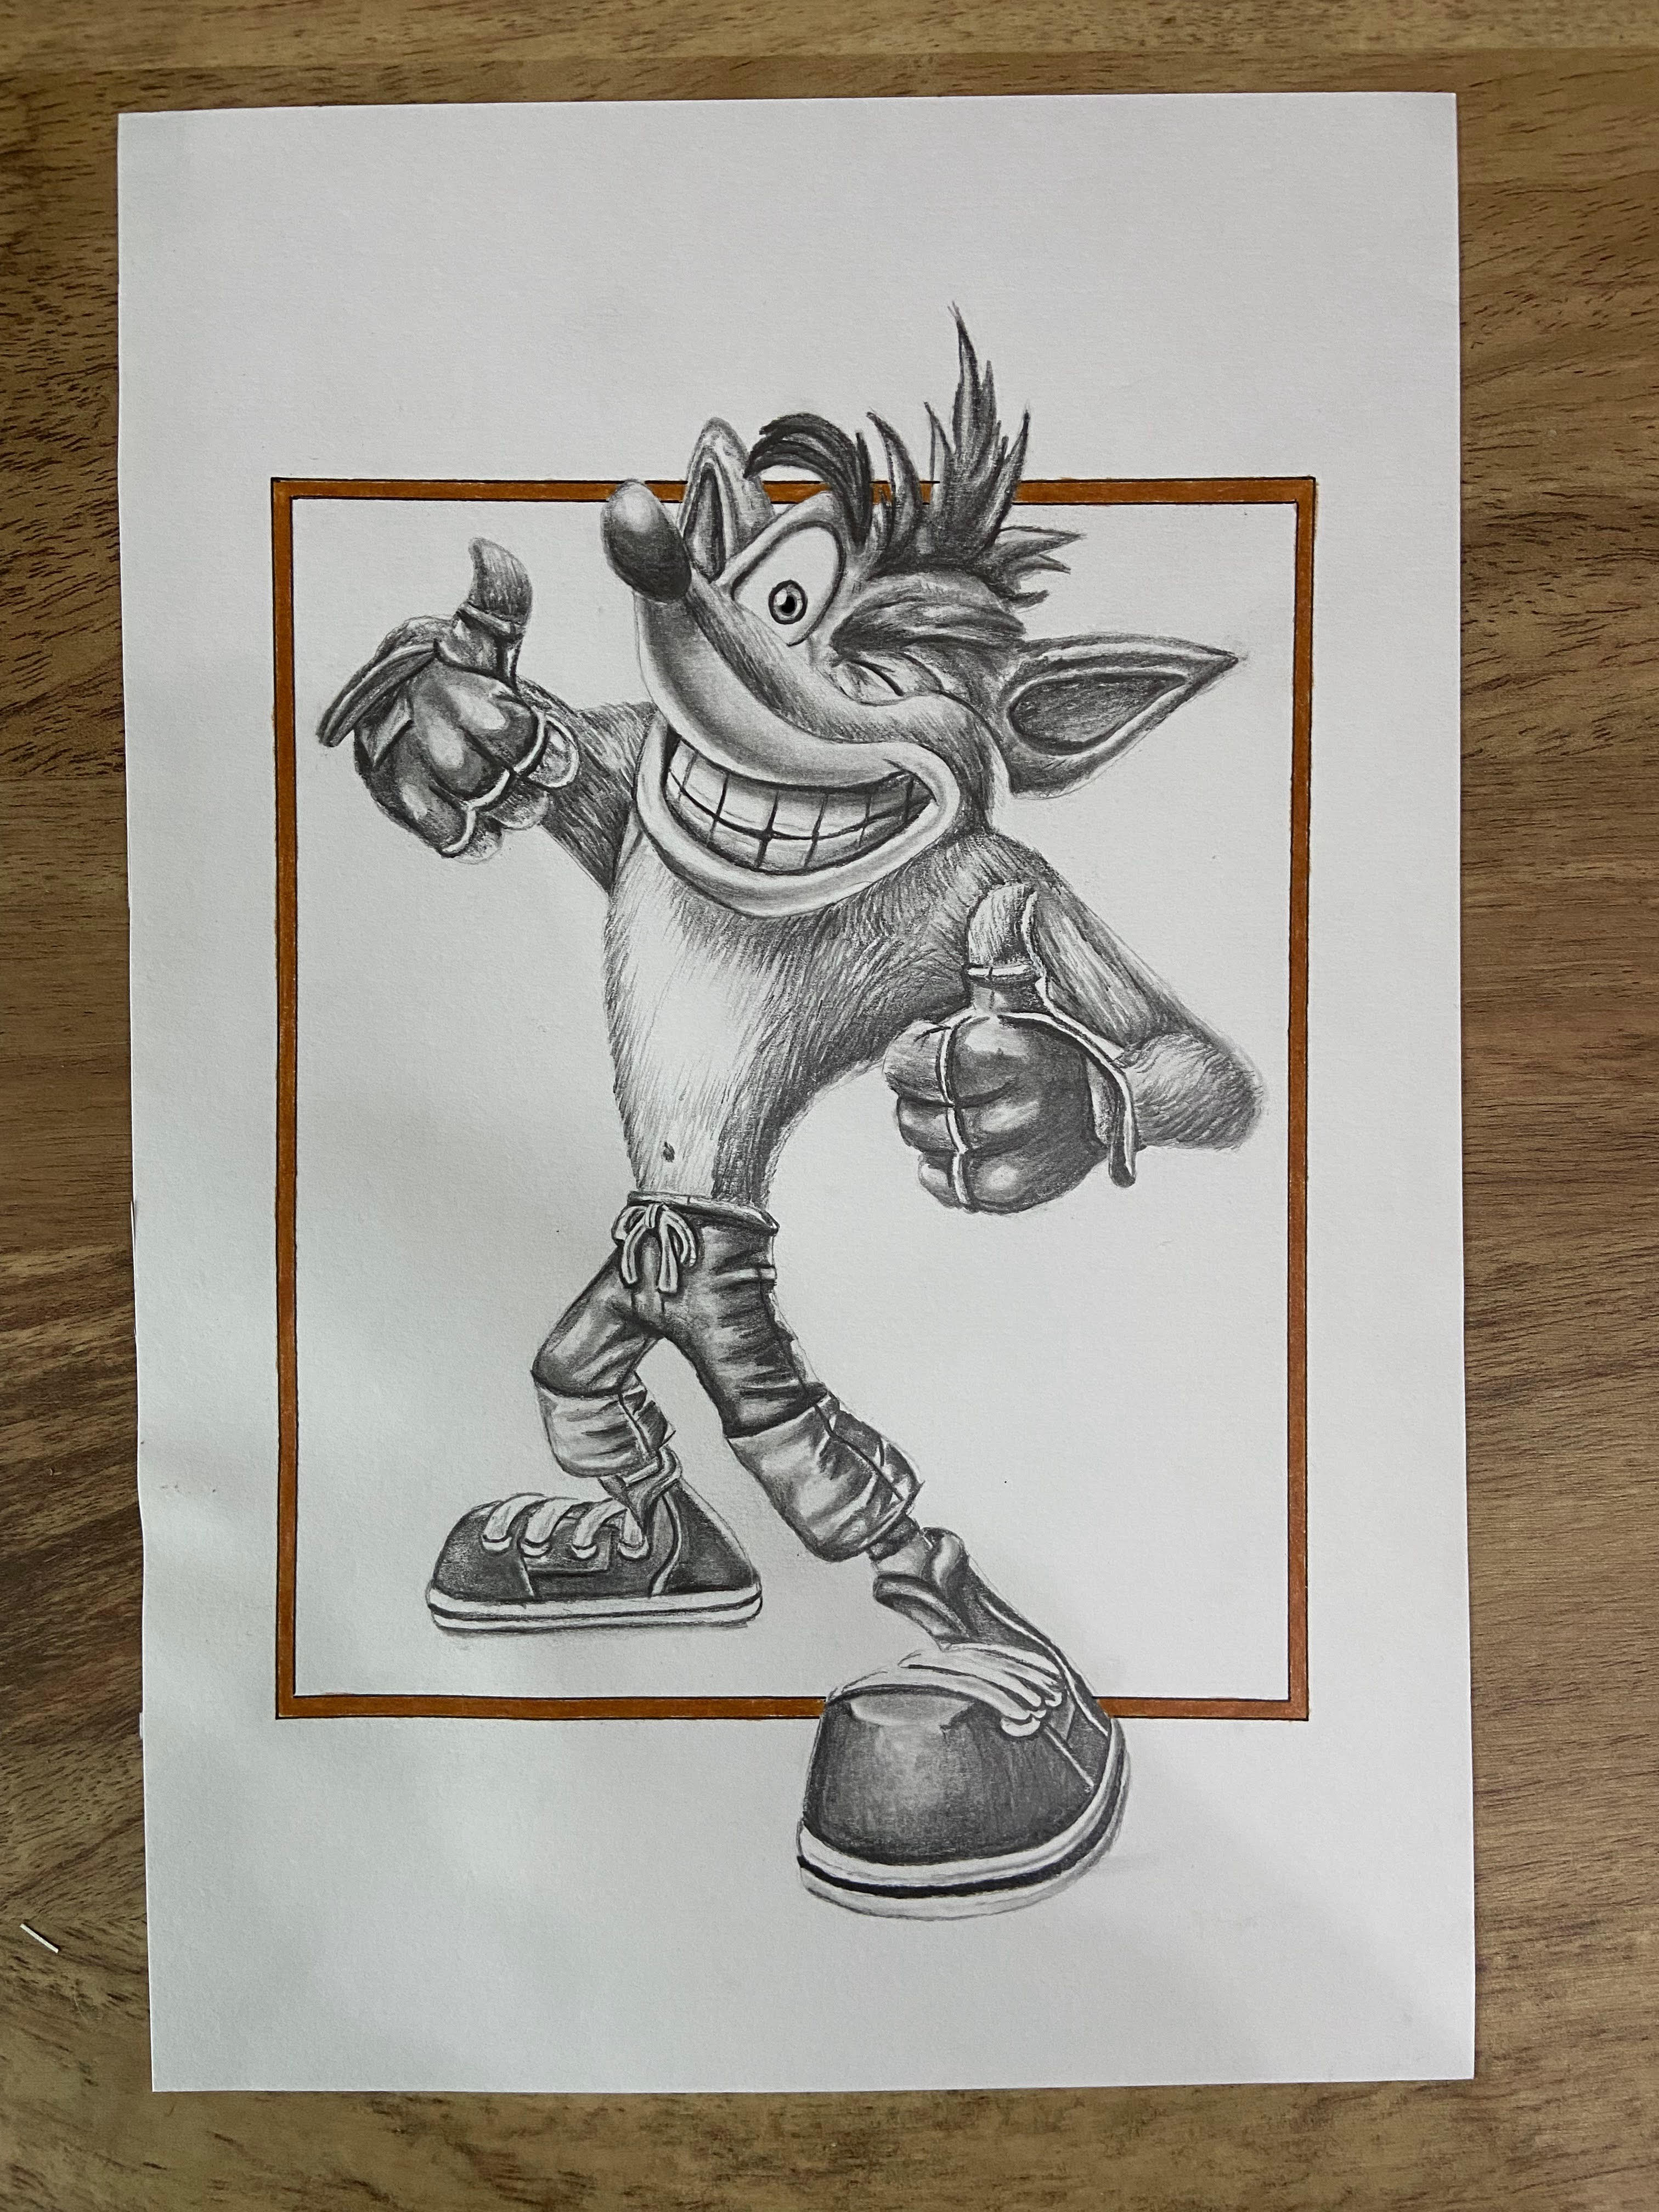 Pencil drawing of Crash Bandicoot from the videogame Crash Bandicoot